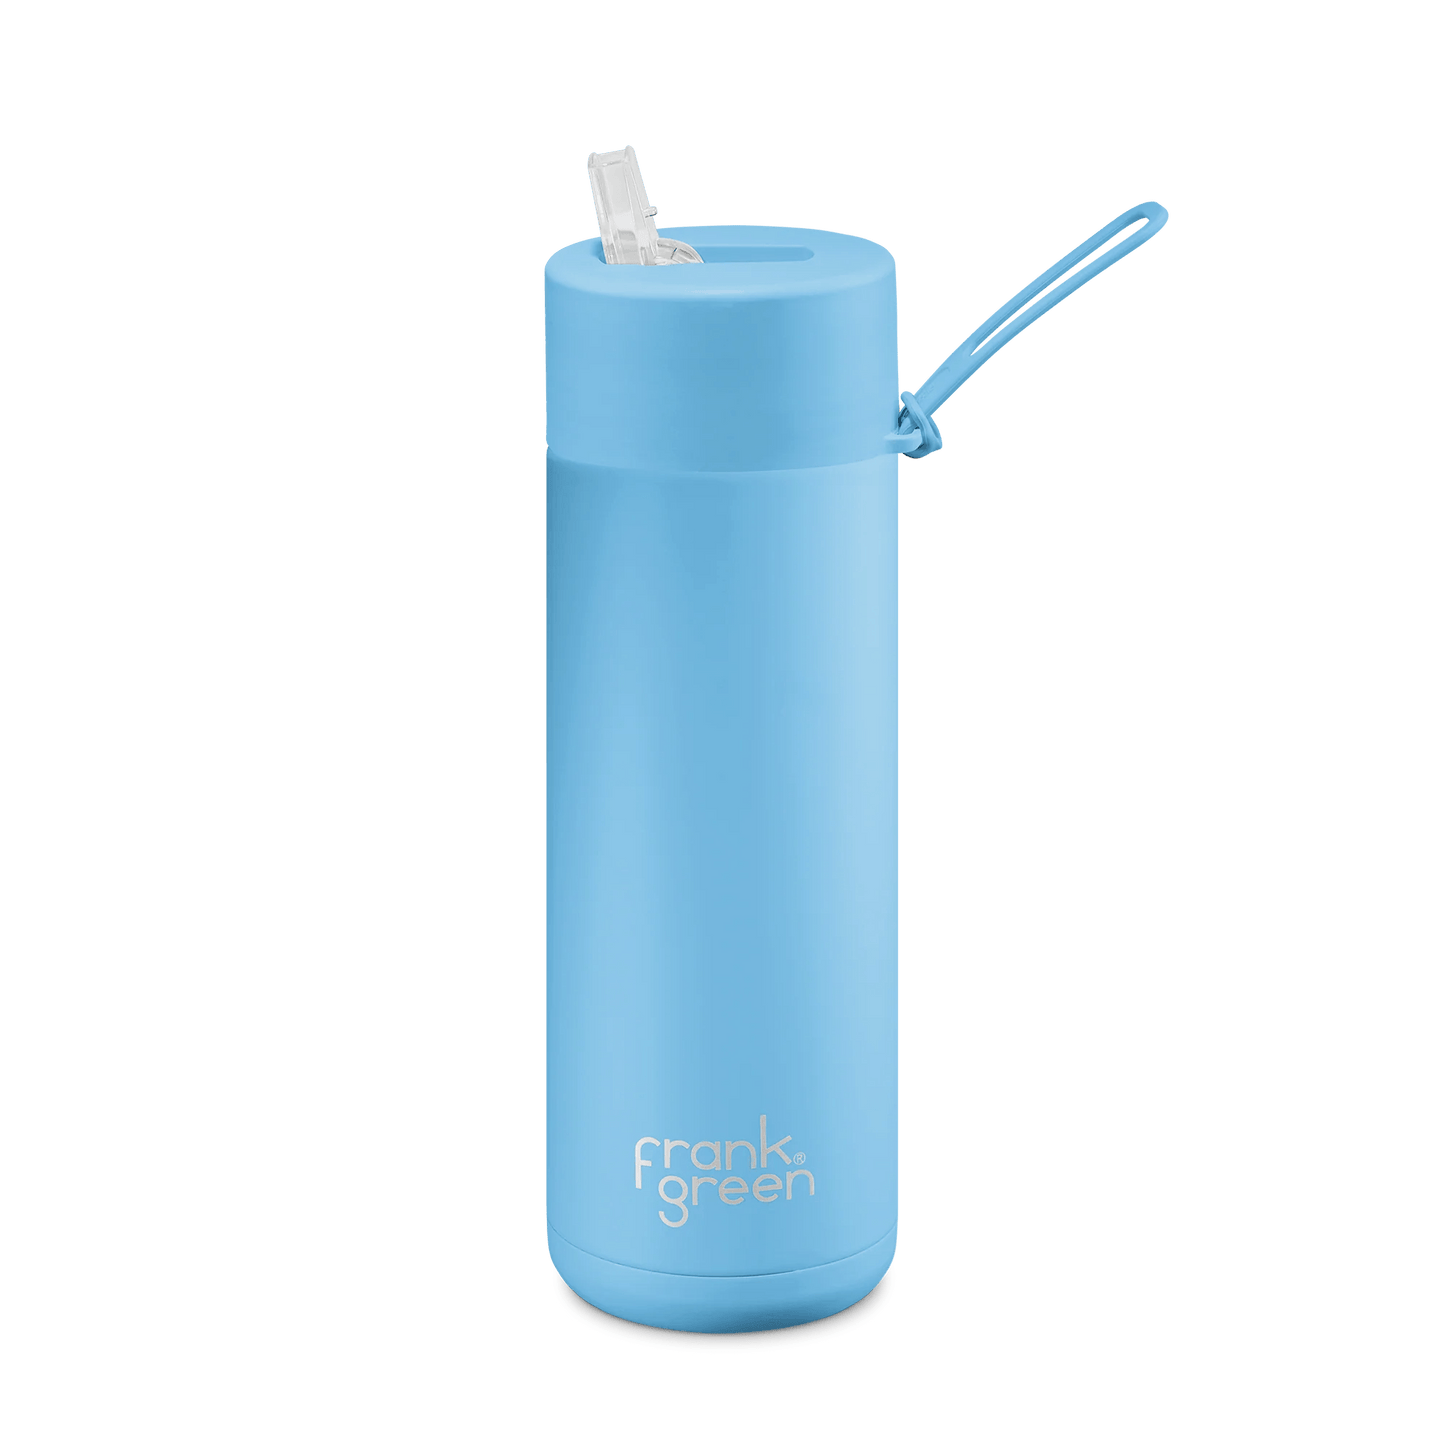 Frank Green Reusable Bottle - Sky Blue (20oz / 595ml) - Prepp'd Kids - Frank Green